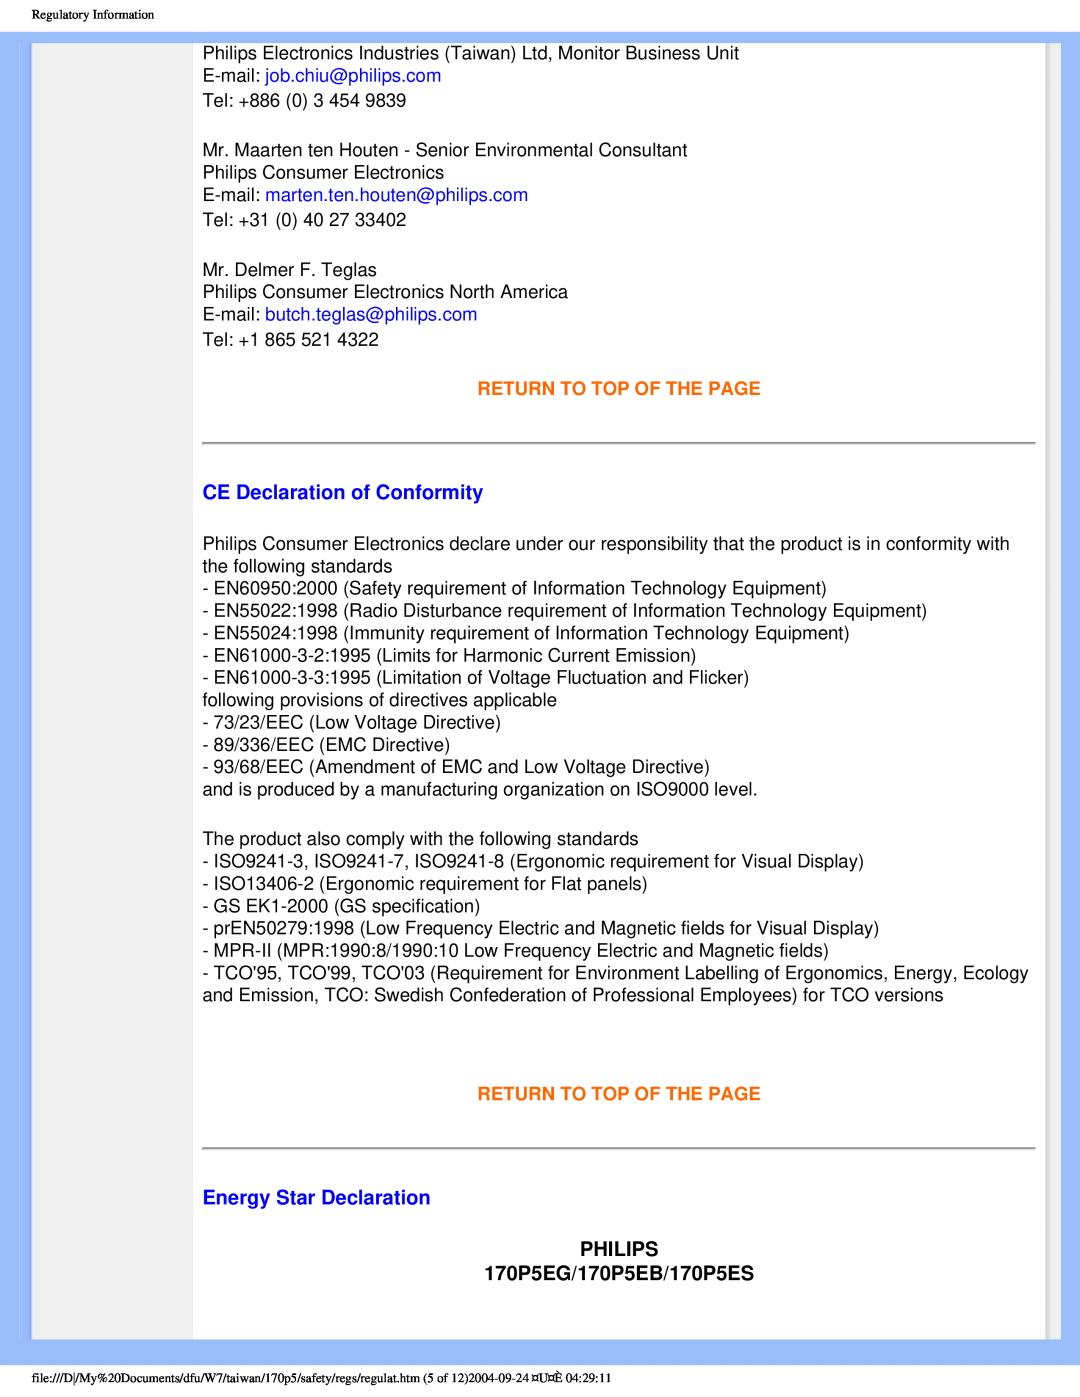 Philips 170p5 user manual CE Declaration of Conformity, Energy Star Declaration, PHILIPS 170P5EG/170P5EB/170P5ES 